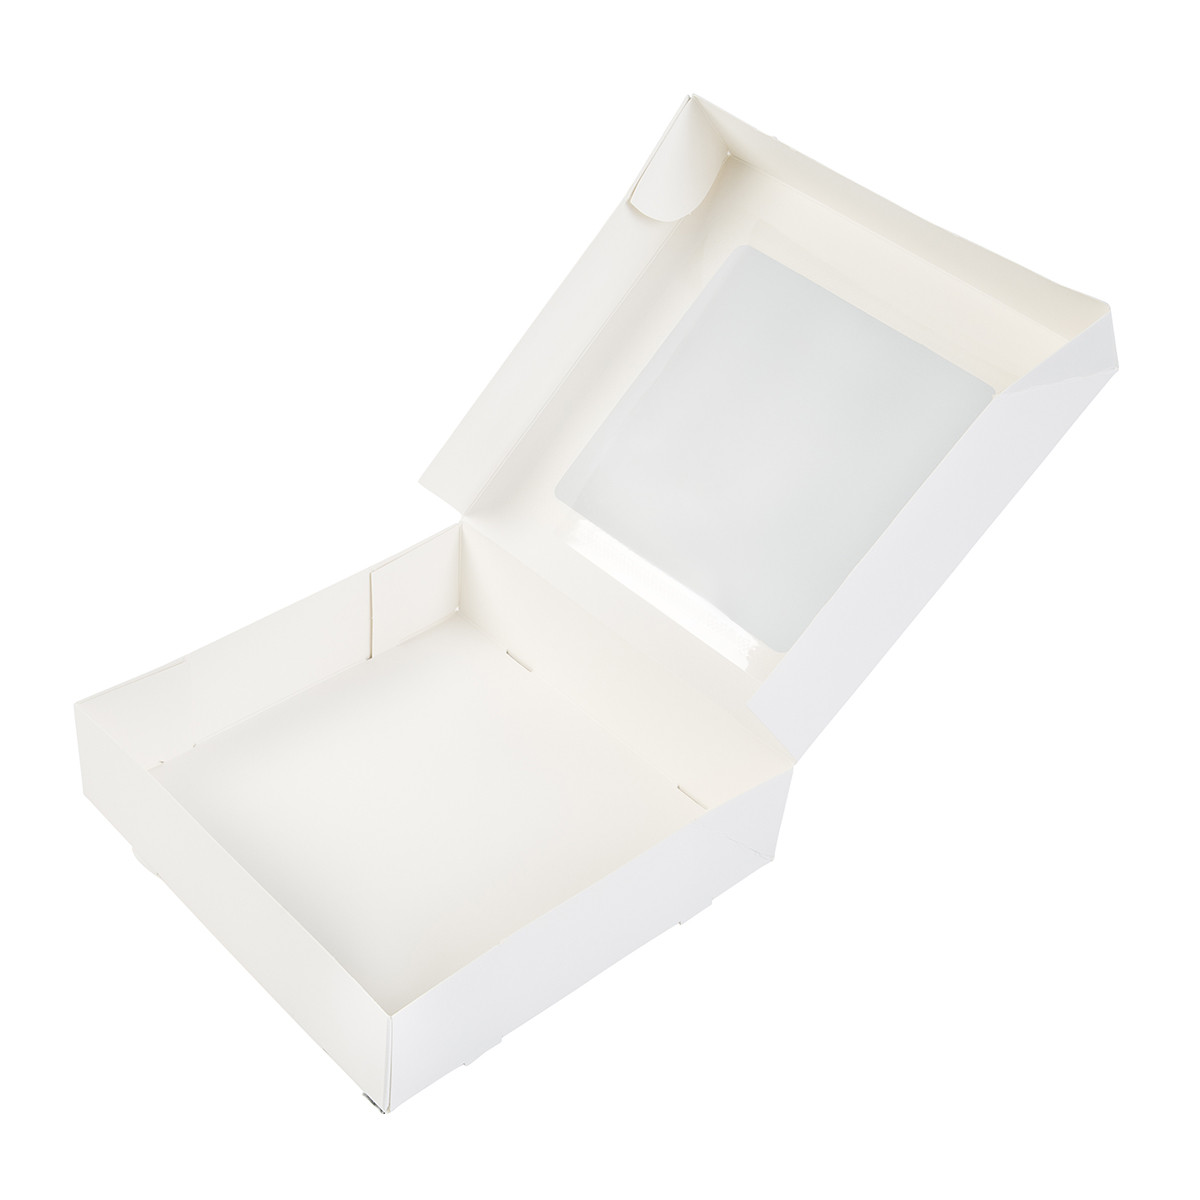 Cake box with window 19x19x5cm. White 3pcs